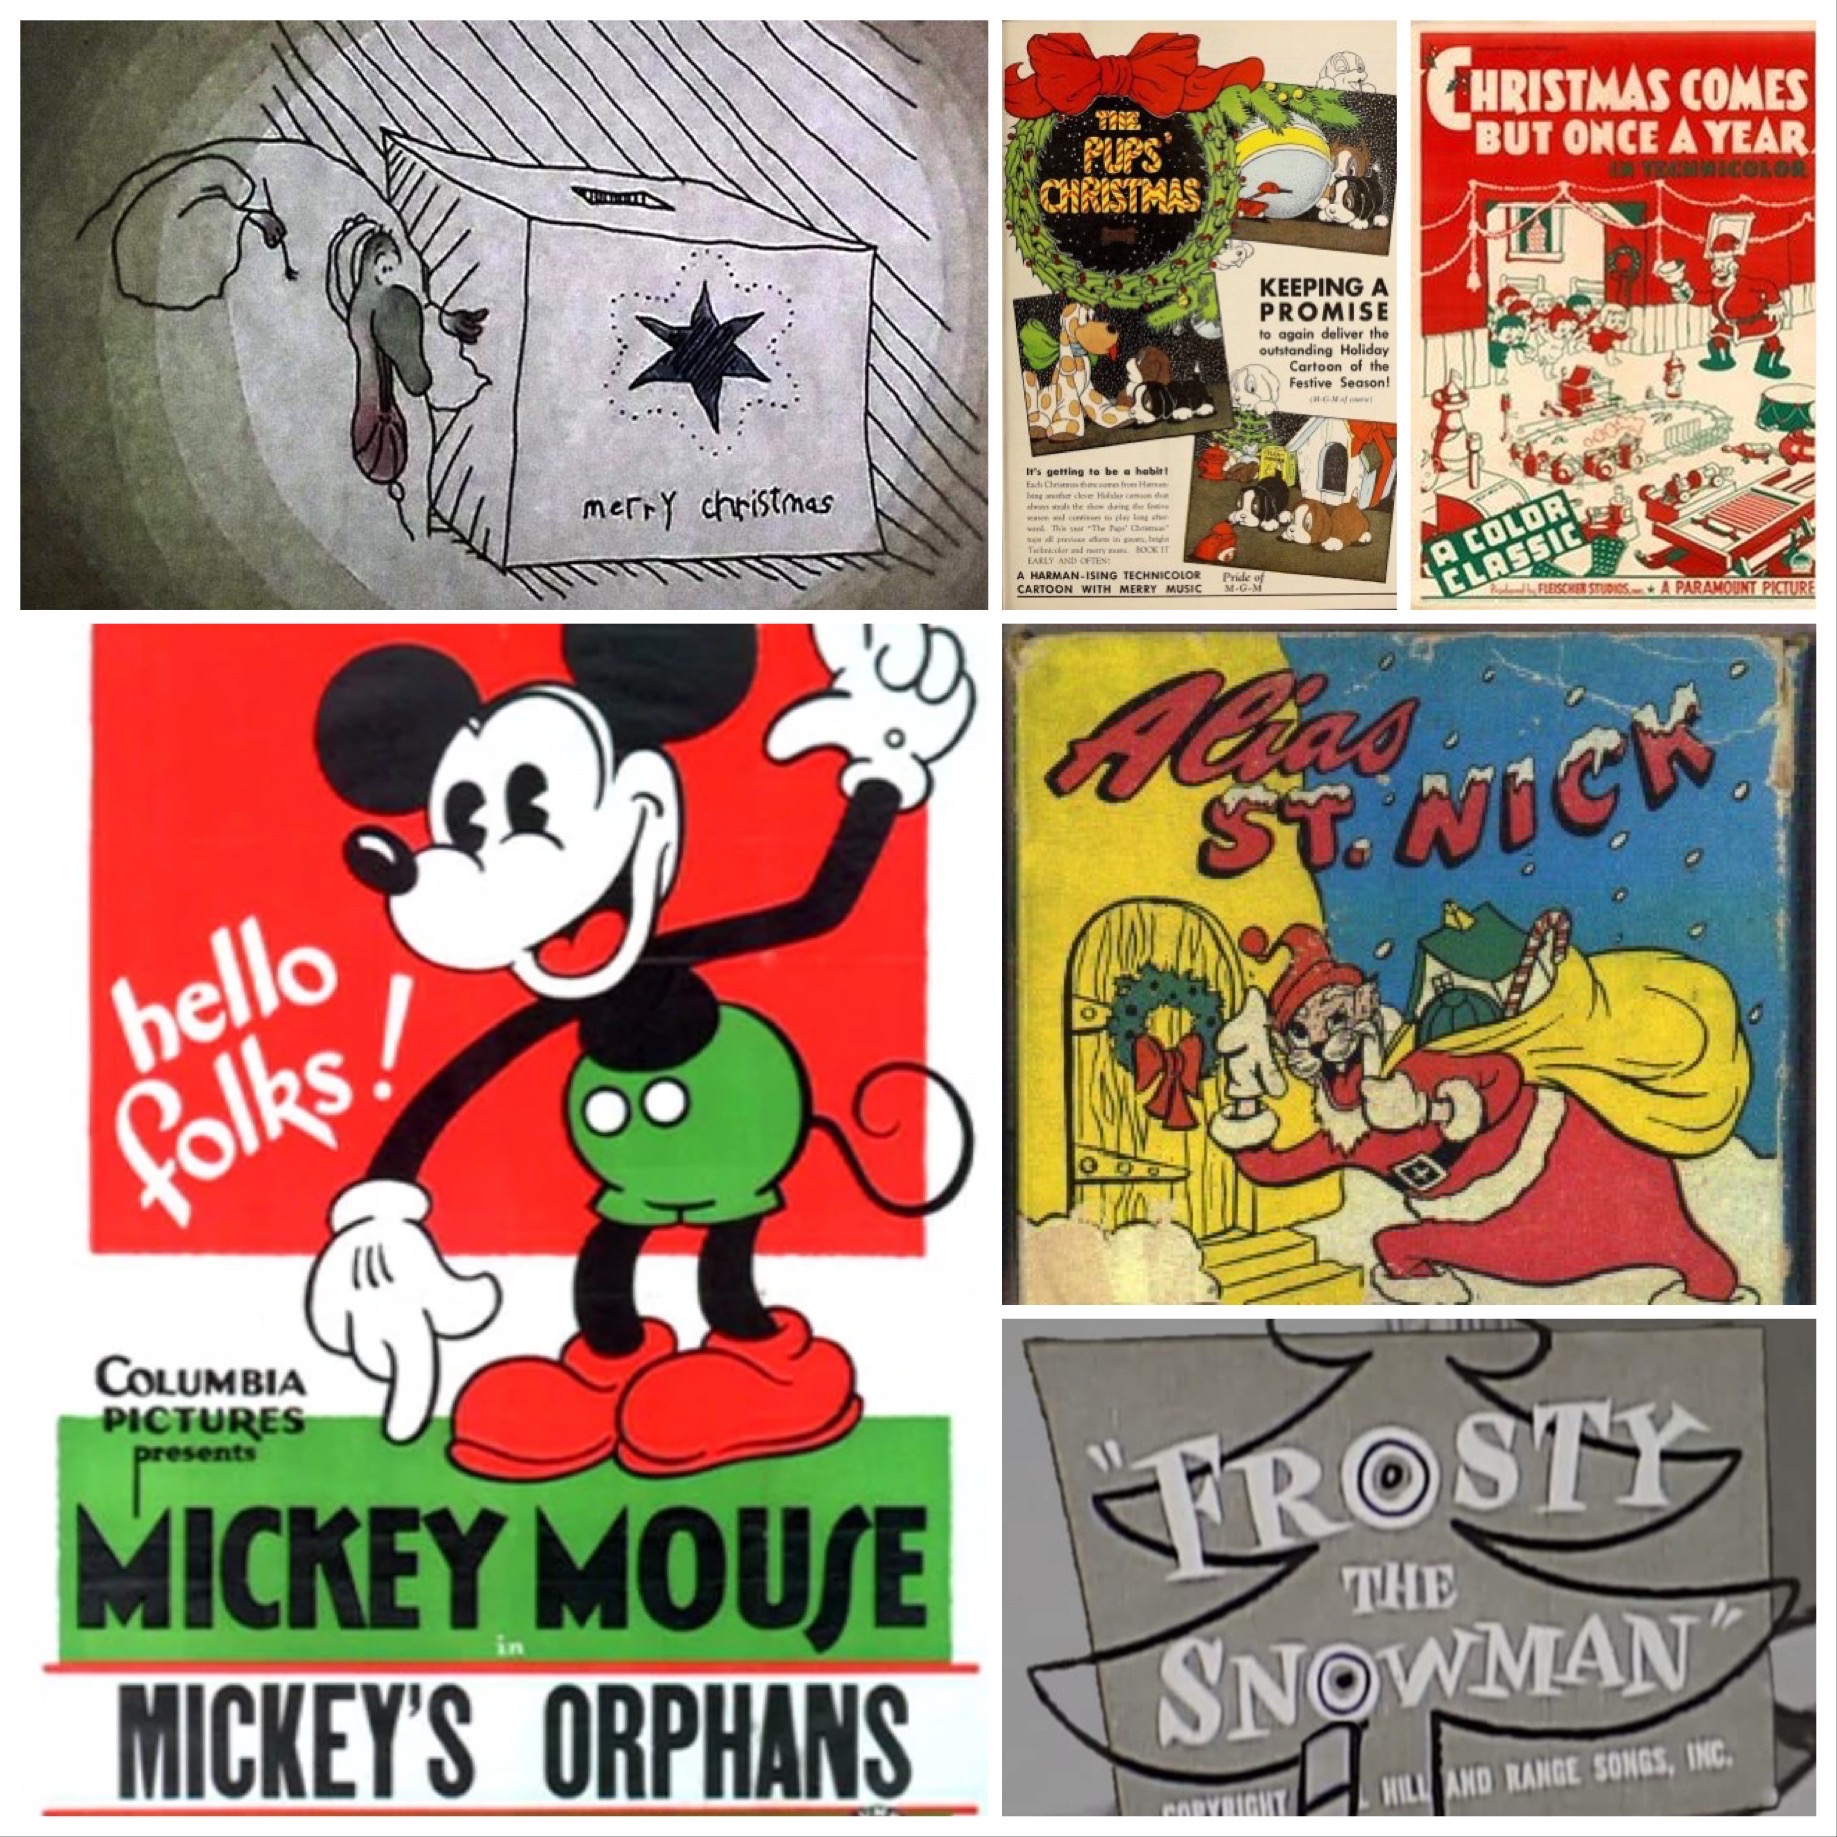 Vintage Mickey Mouse Photo Album 80s 90s Disney Collectible Photo Album NOS  -  Sweden